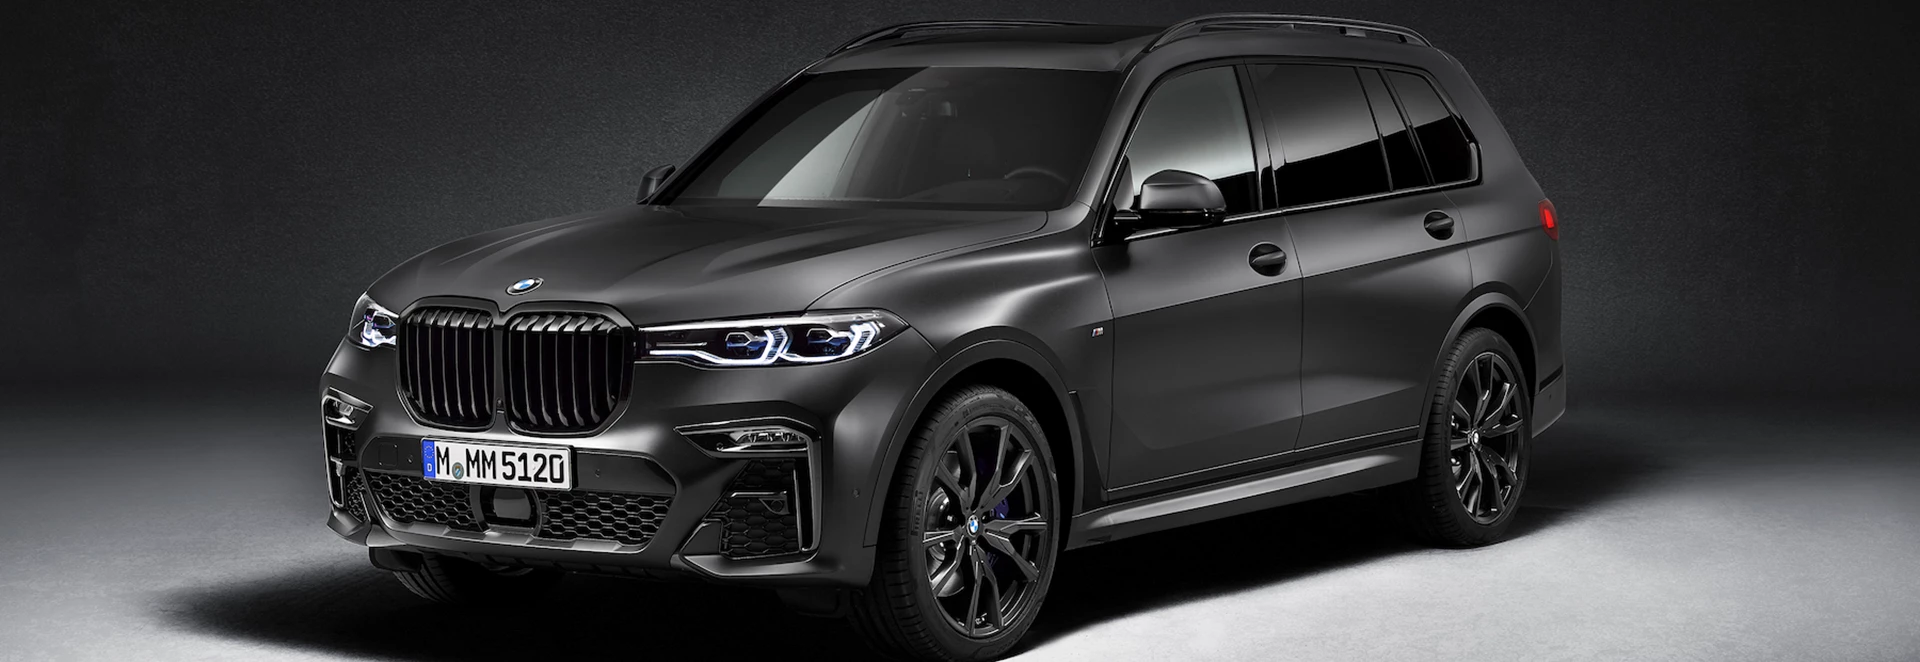 Exclusive BMW X7 Dark Shadow Edition unveiled 